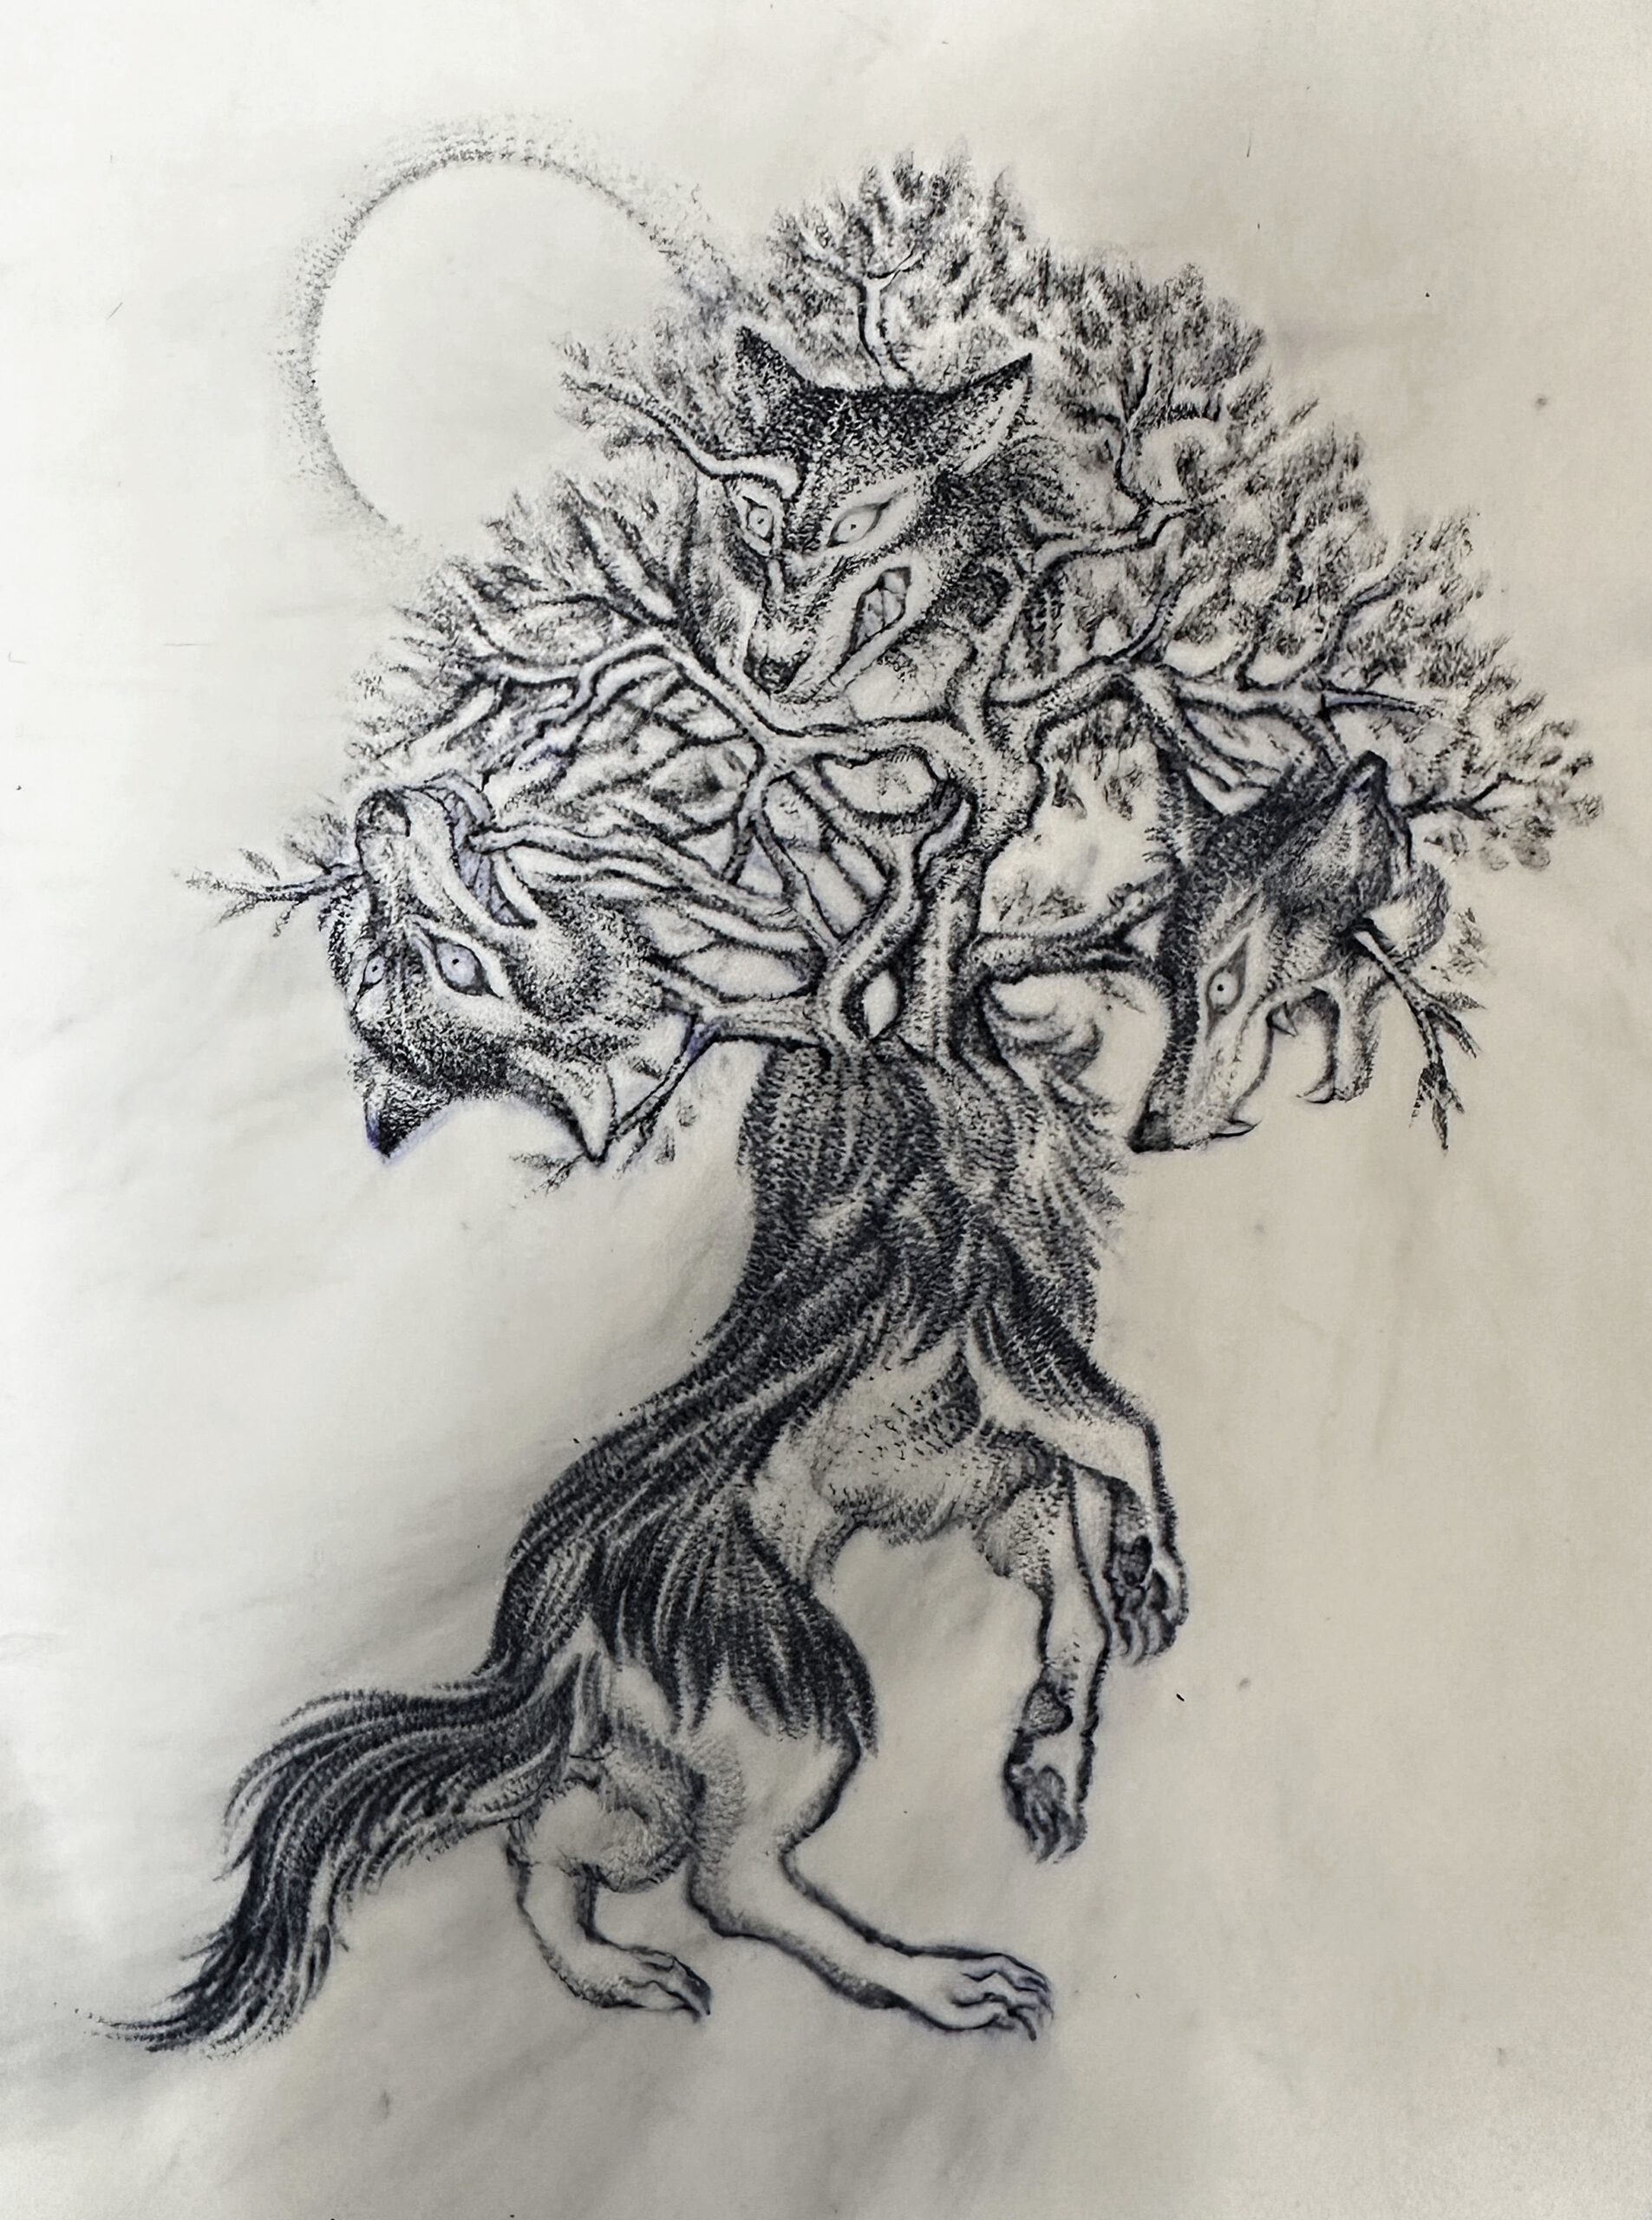 AYAKAウルフツリーアートワークタトゥースキン人工皮膚狼と木